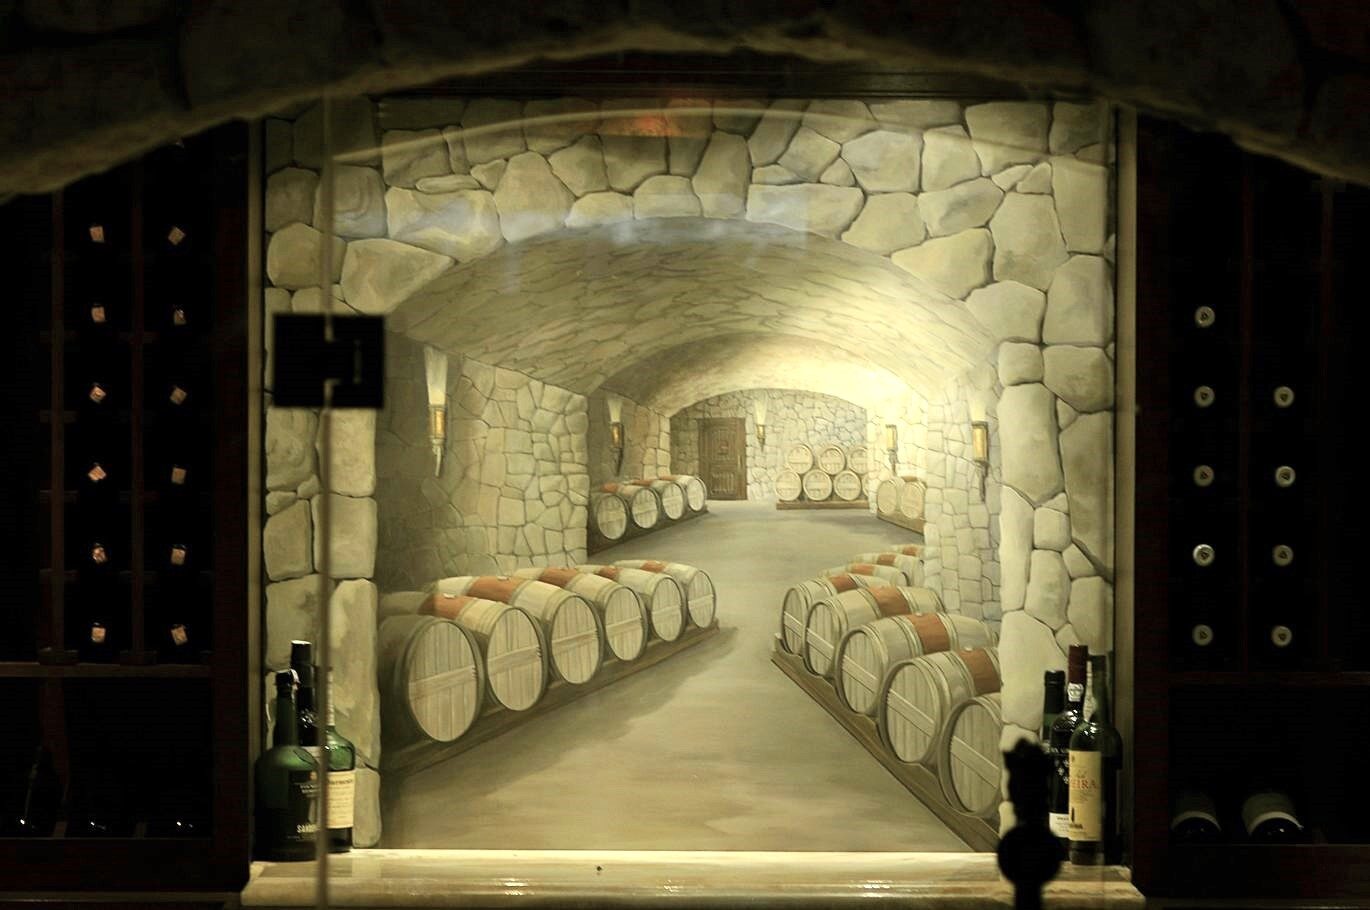 Wine cellar paining in a wine cellar